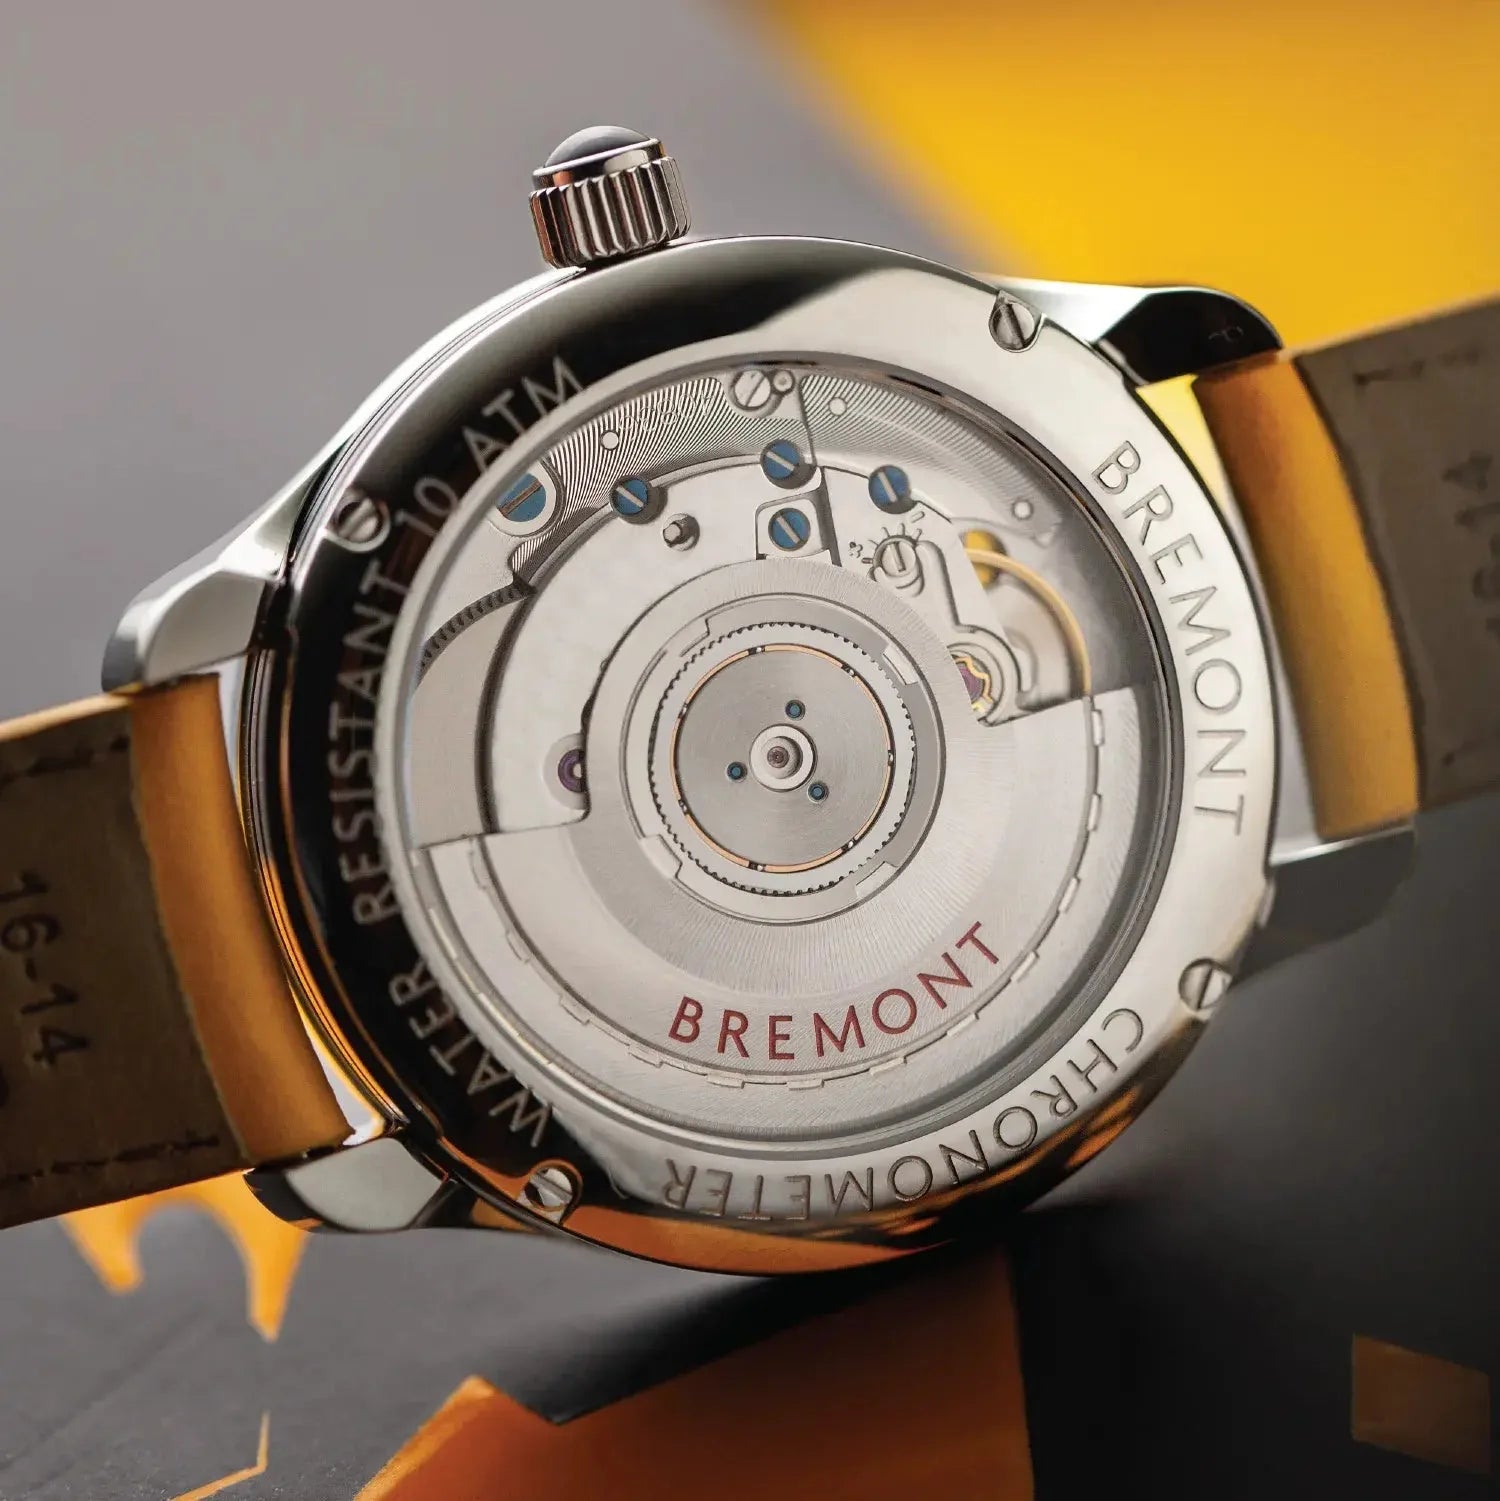 Bremont Chronometers Watches | Ladies | SOLO-34 Argylle Elly